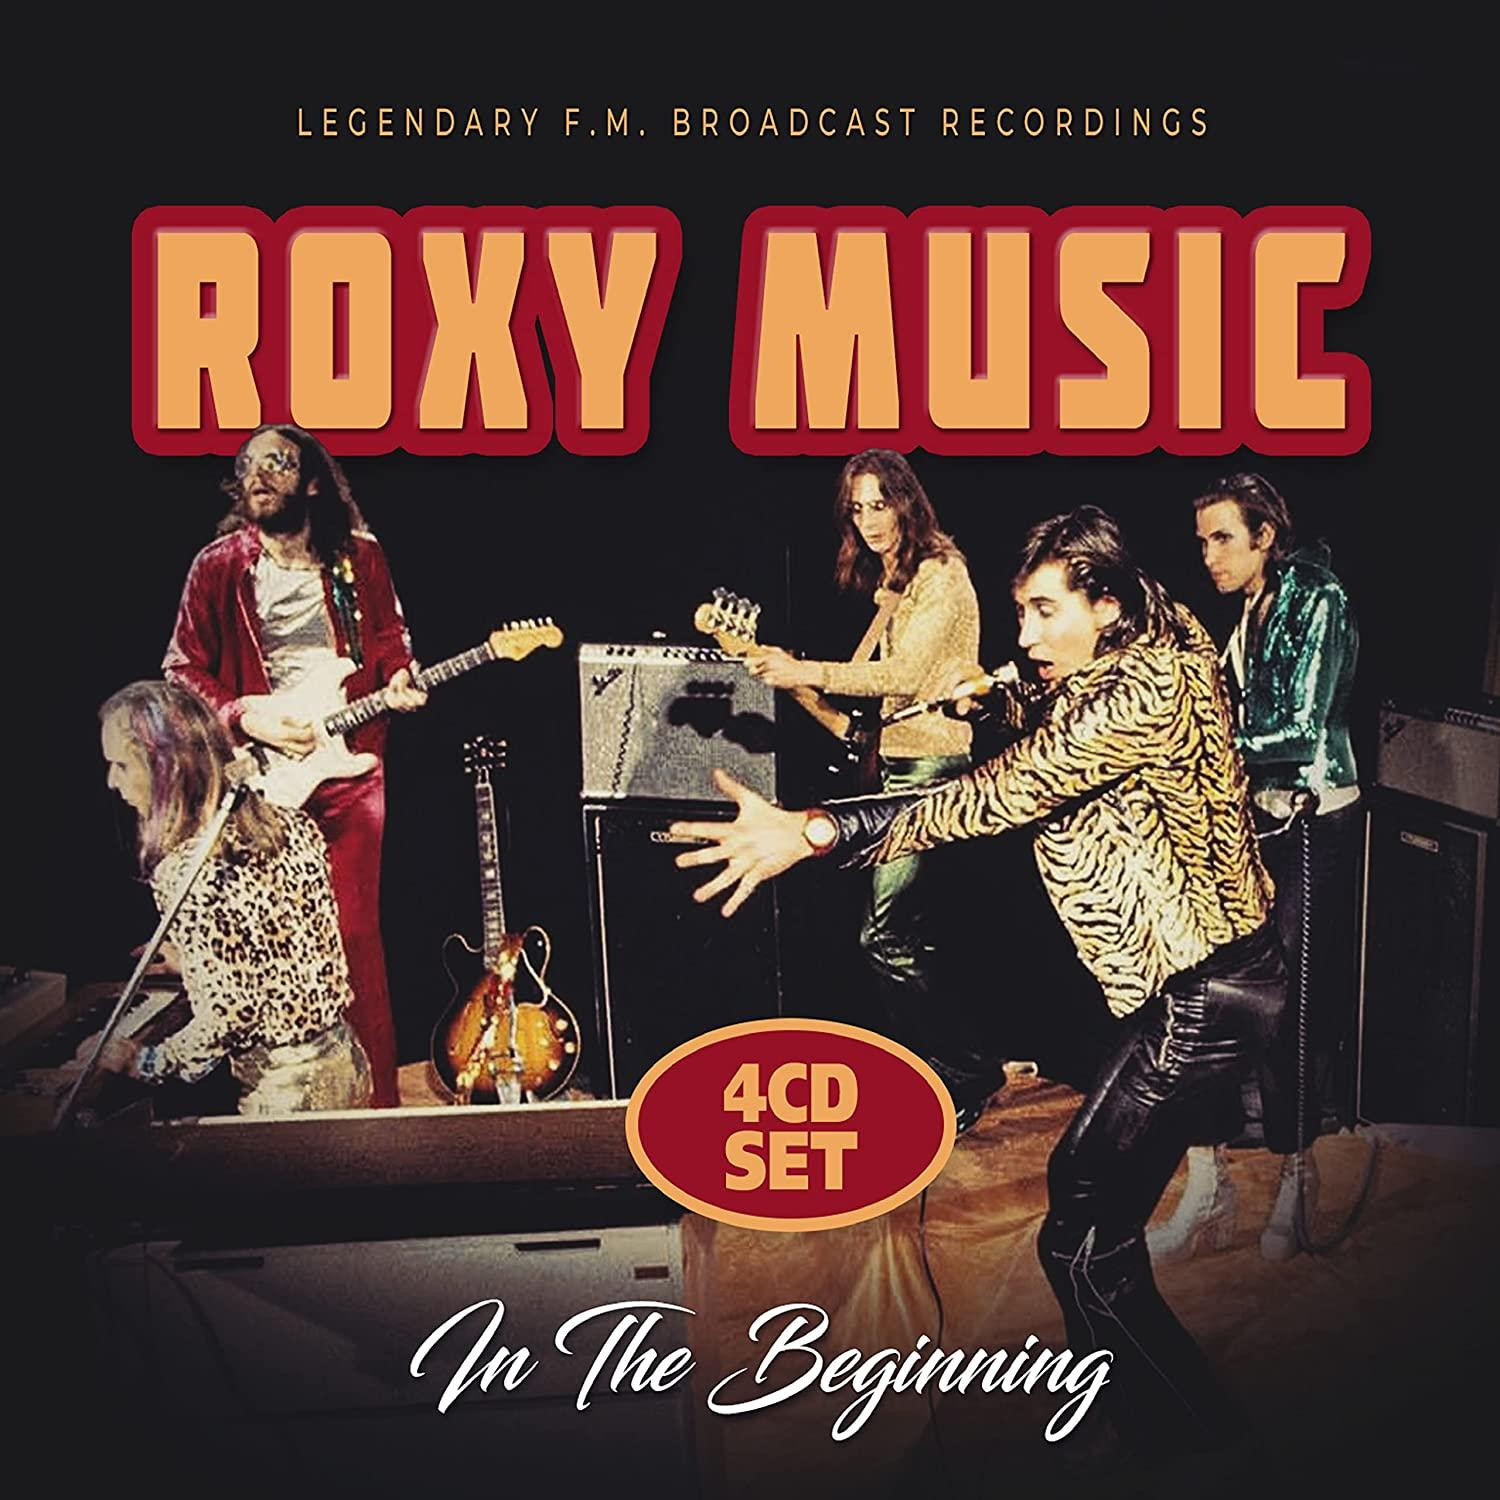 The - - FM Music Broadca Set)-Legendary (4-CD (CD) In Roxy Beginning